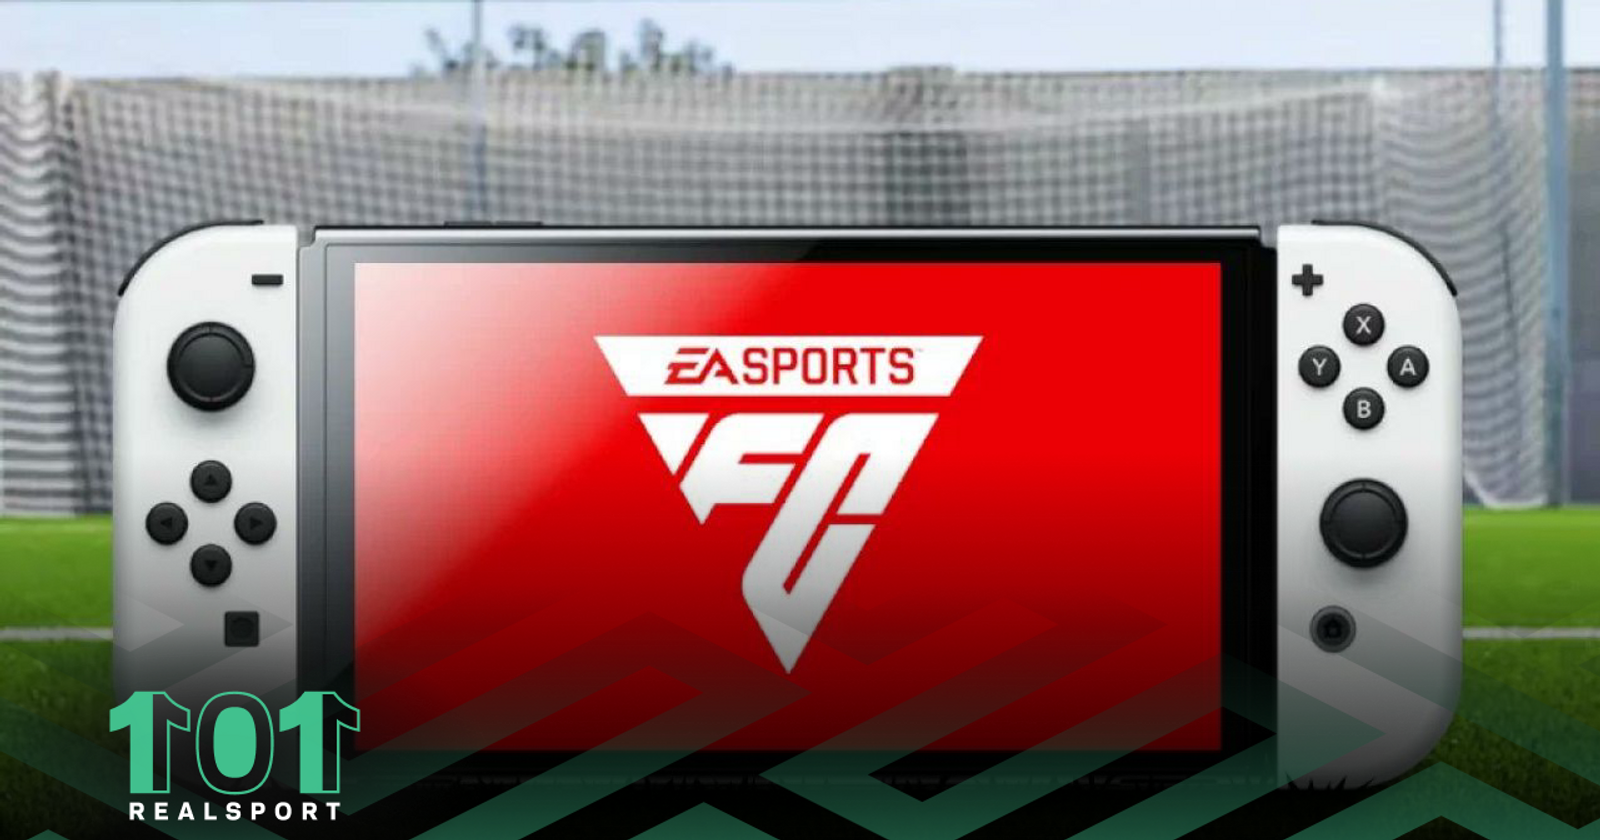  EA SPORTS FC 24 - Nintendo Switch : Everything Else